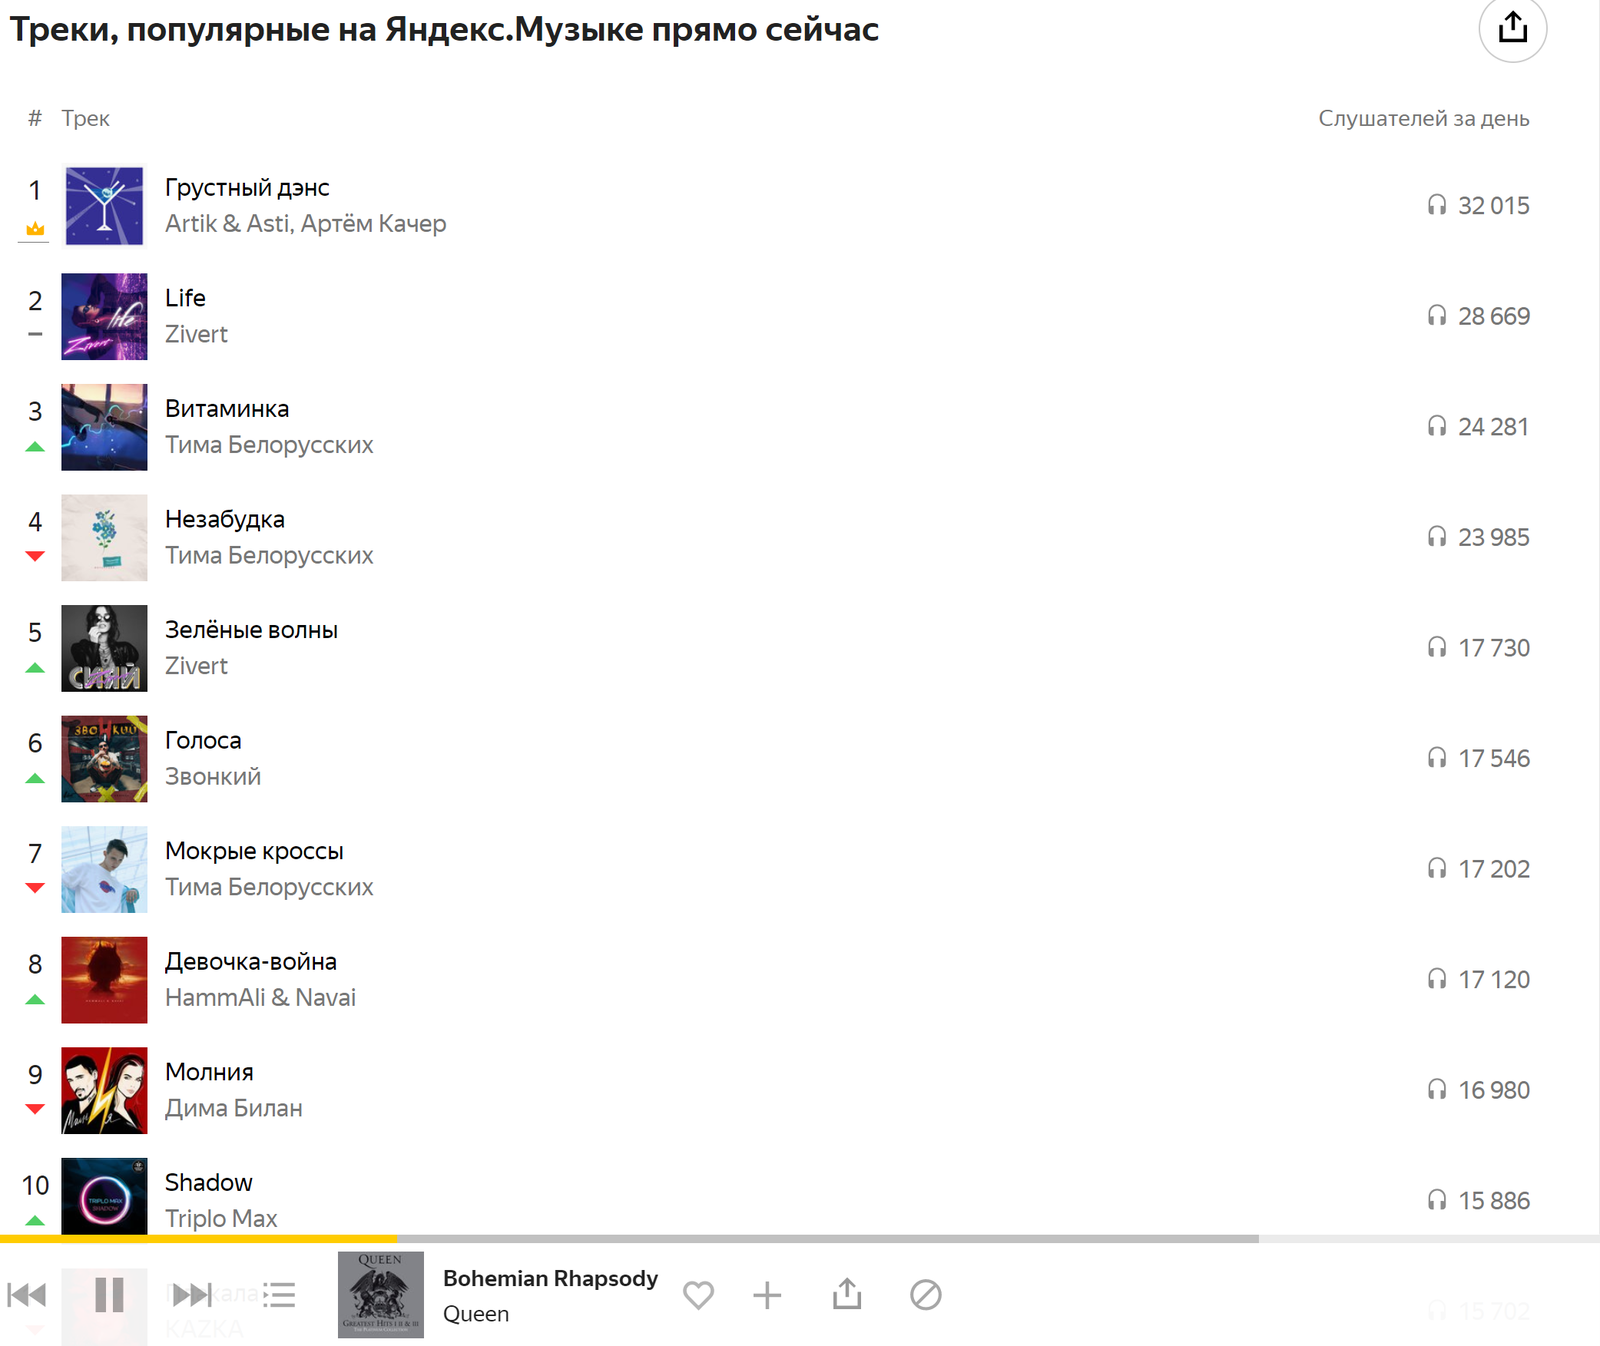 Popular in Yandex.Music - Queen, Chart, Yandex Music